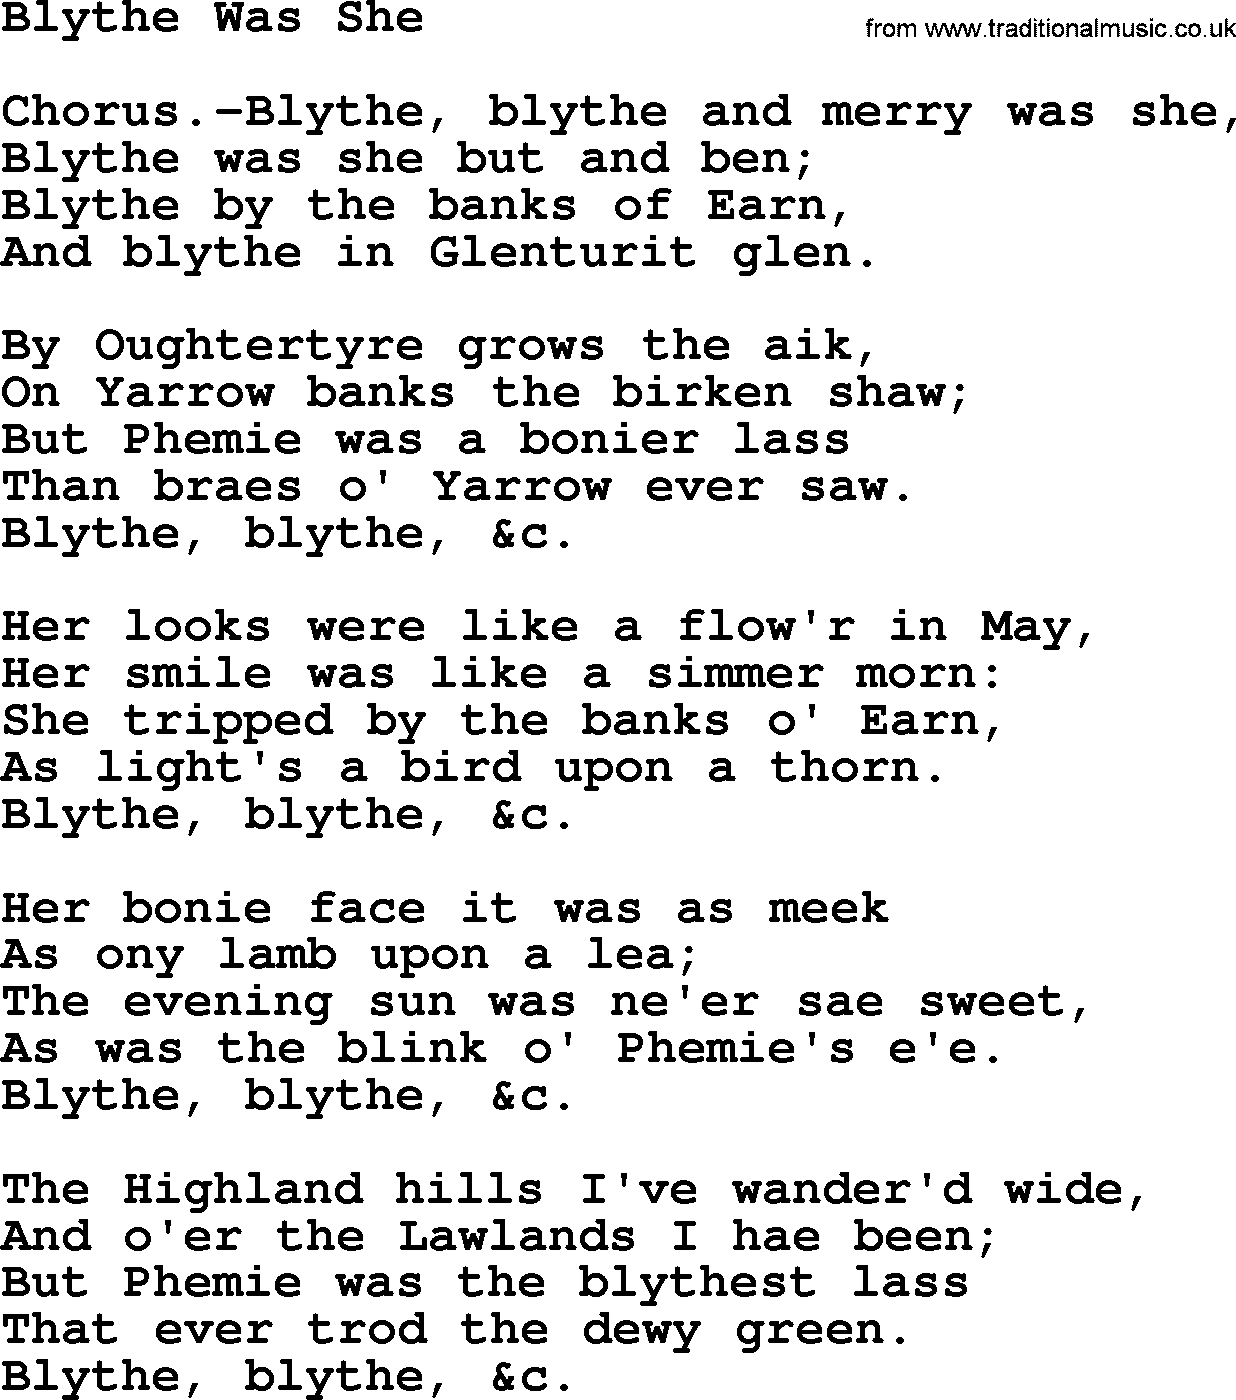 Robert Burns Songs & Lyrics: Blythe Was She